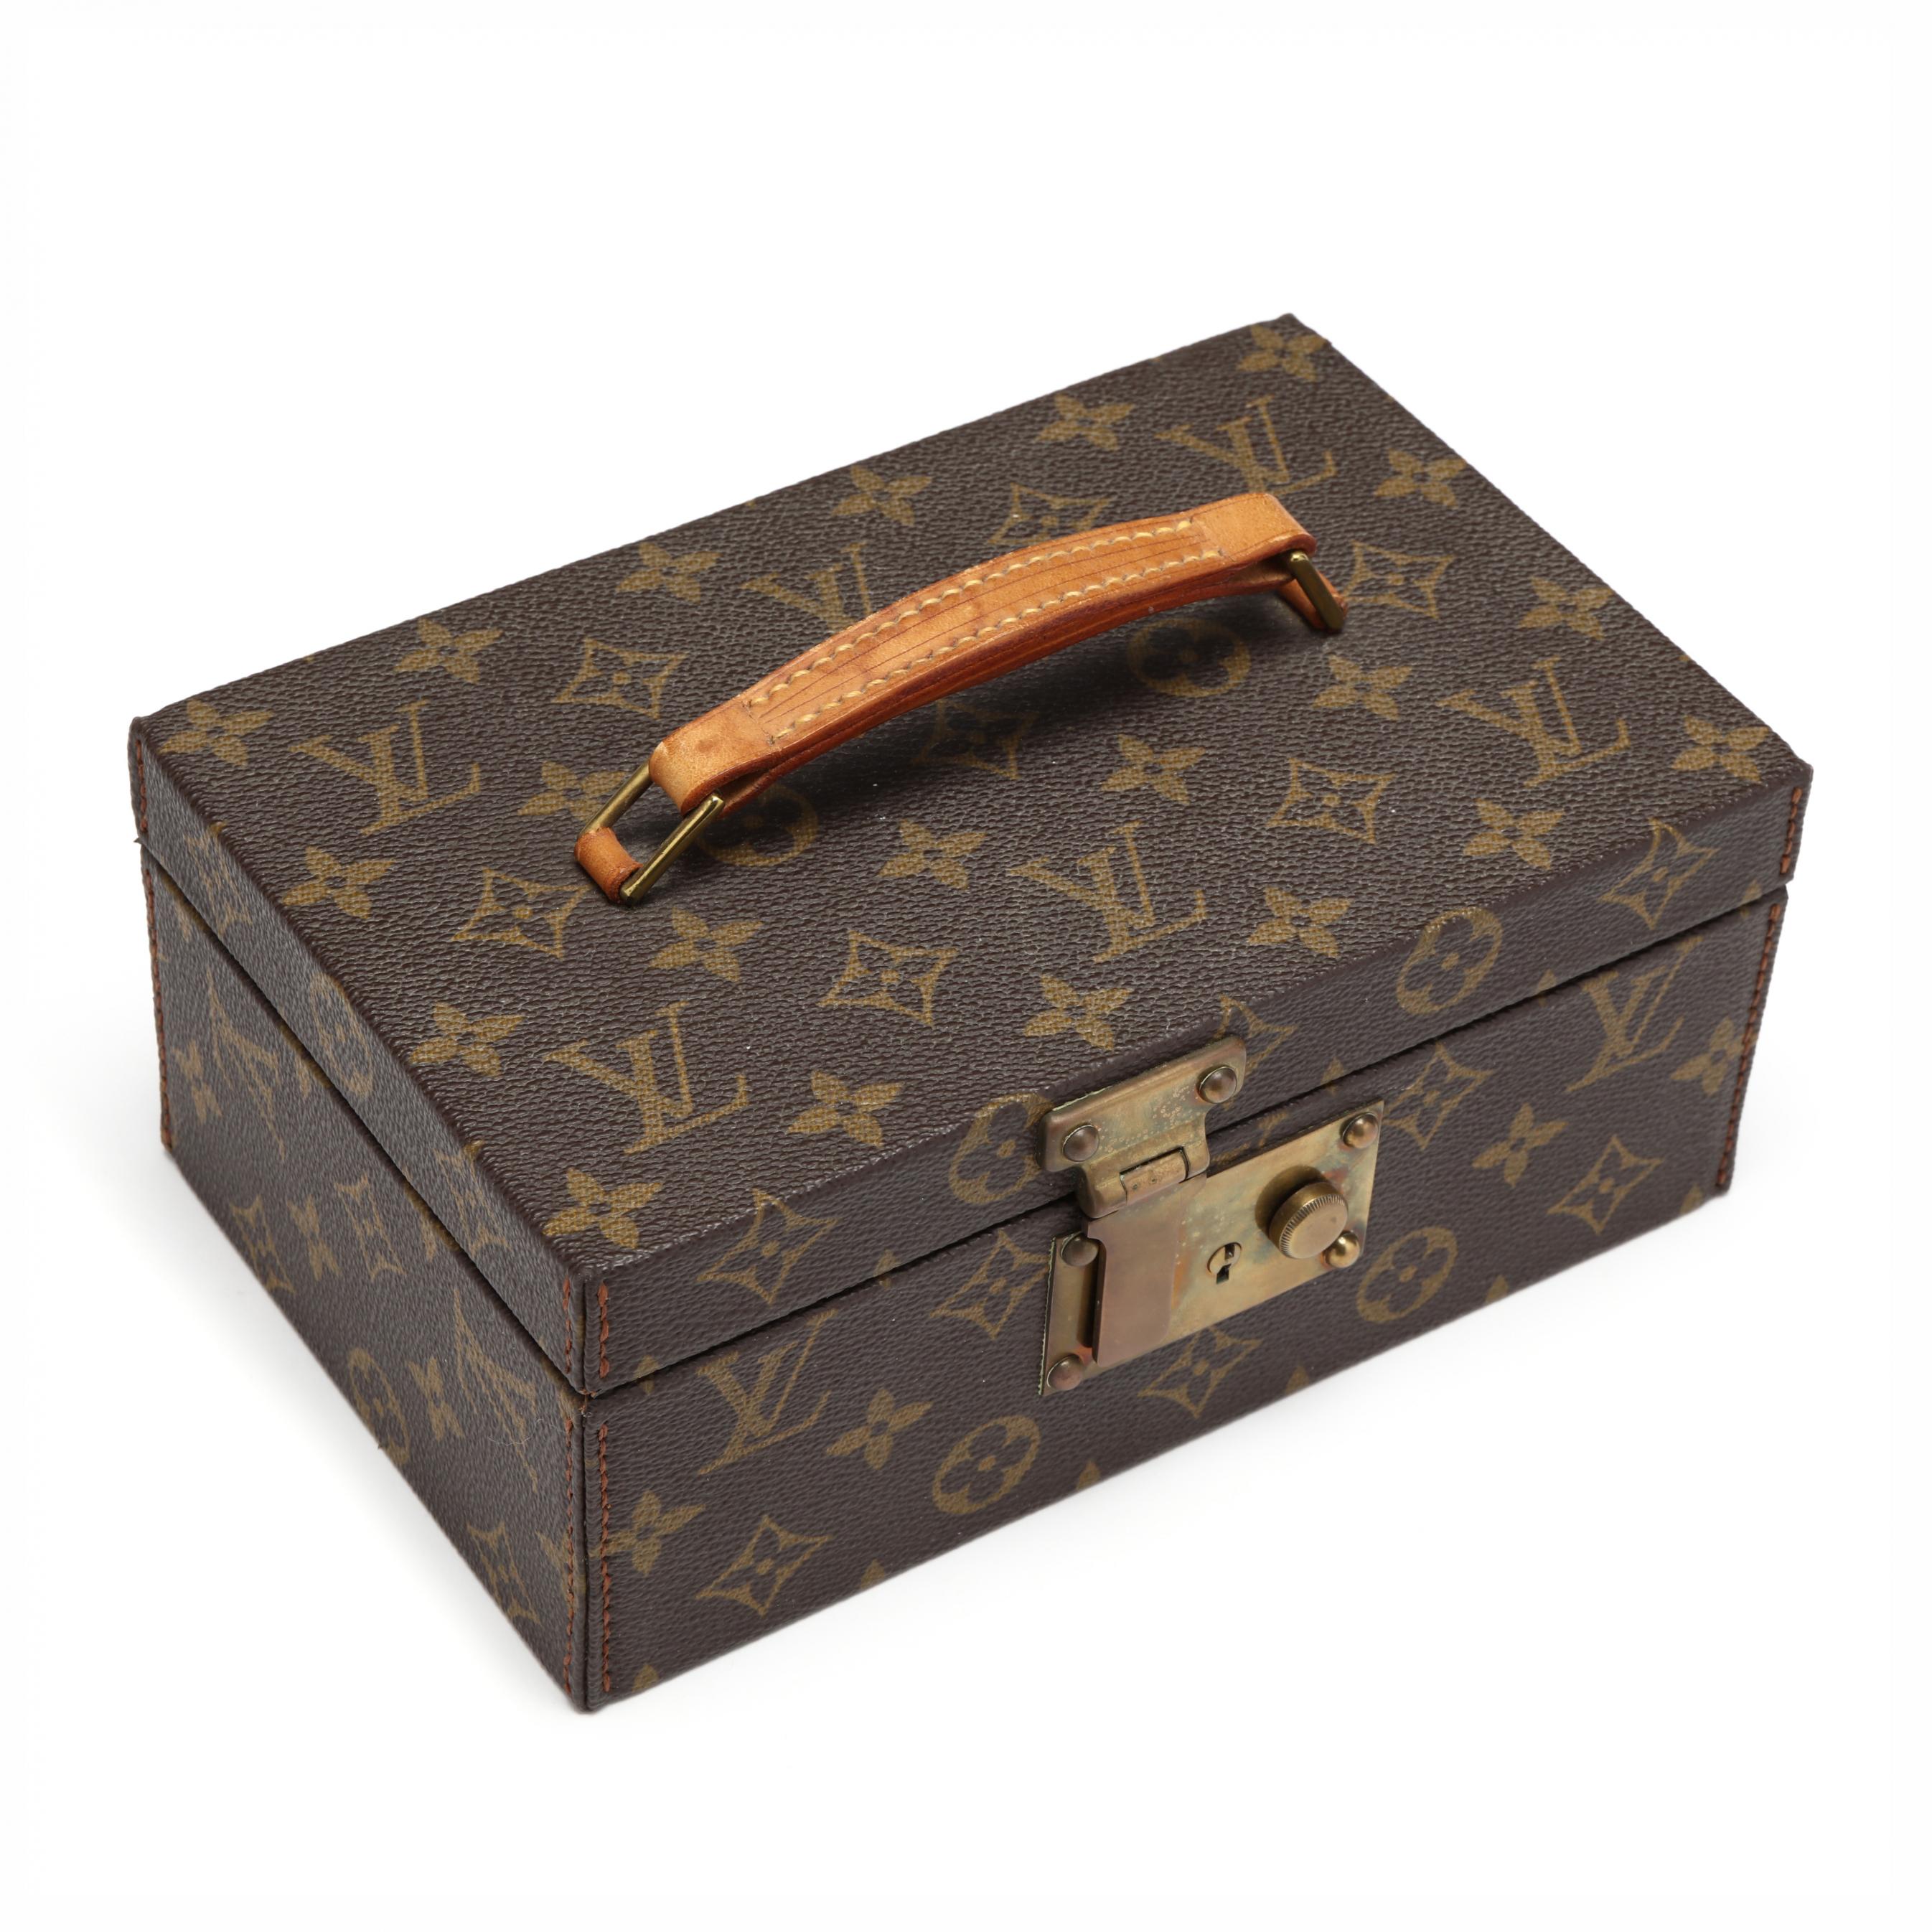 Sold at Auction: Louis Vuitton, LOUIS VUITTON, SPECIAL ORDER BOITE A TOUT JEWELLERY  BOX